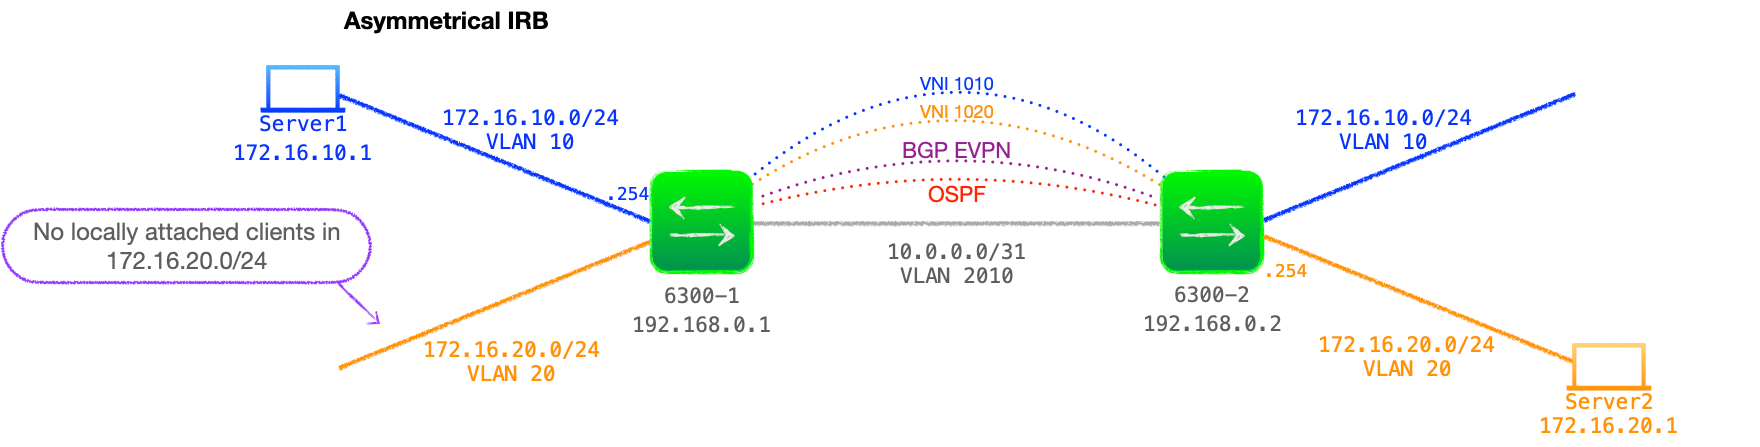 EVPN-VXLAN Explainer 5 - Layer 3 with Asymmetrical IRB